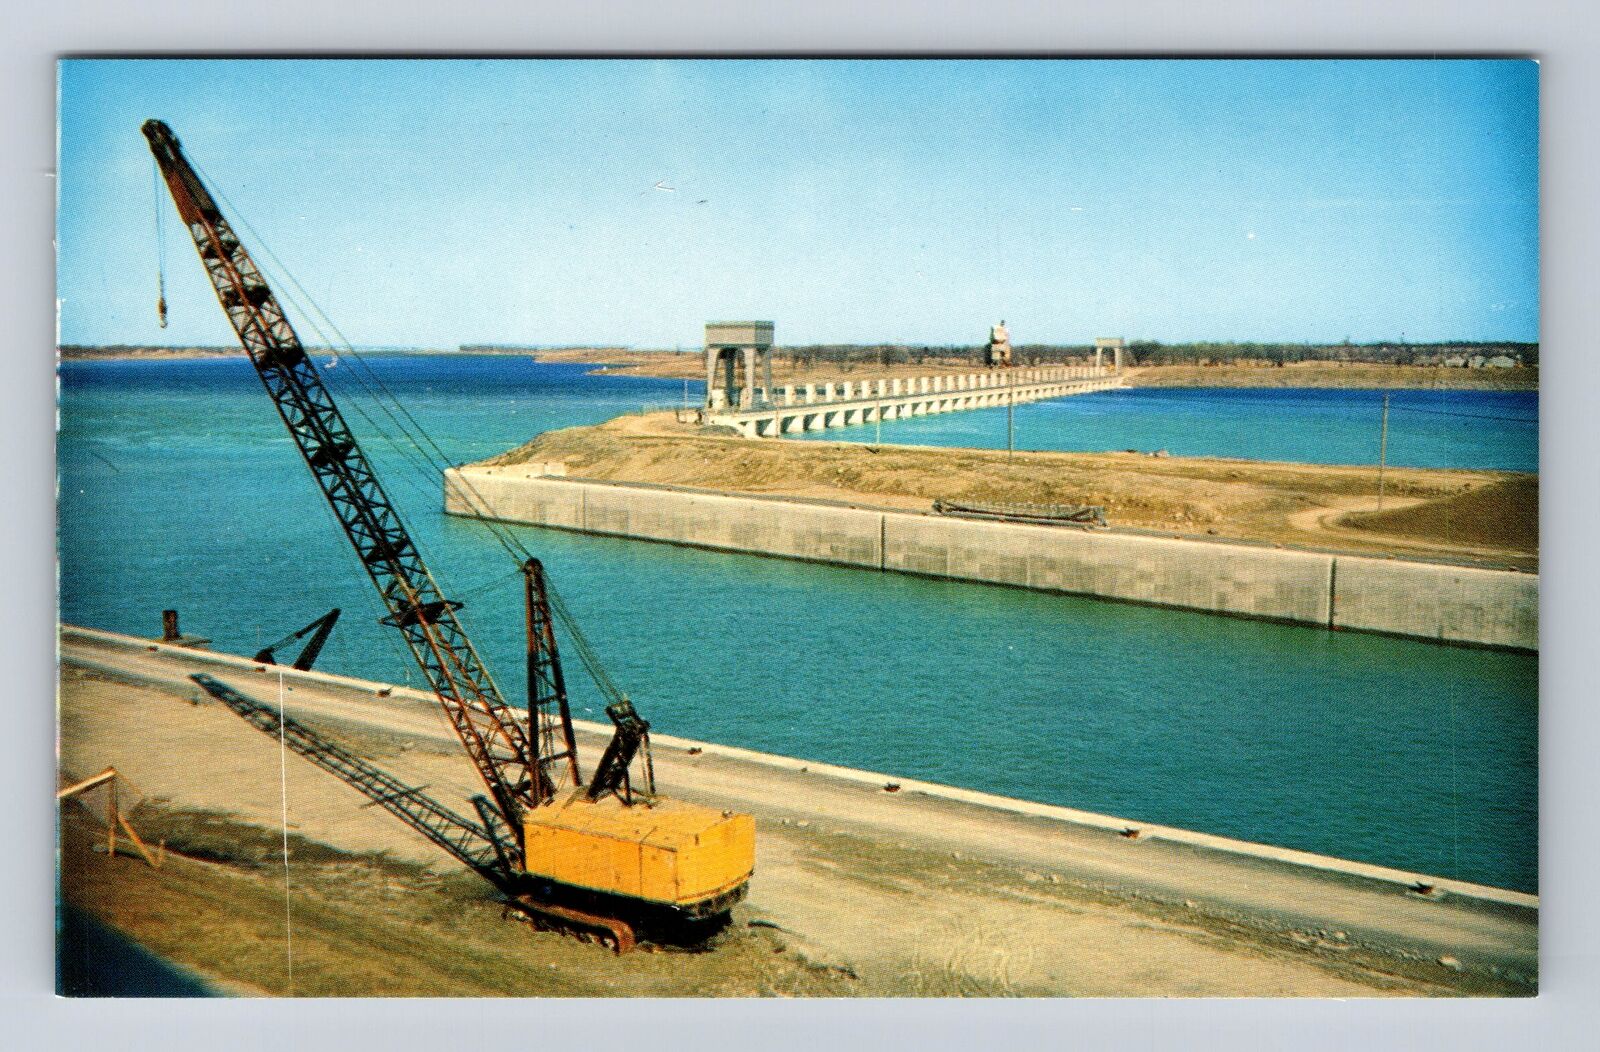 Cornwall Ontario-Canada, Power Plant, Antique, Vintage Souvenir Postcard